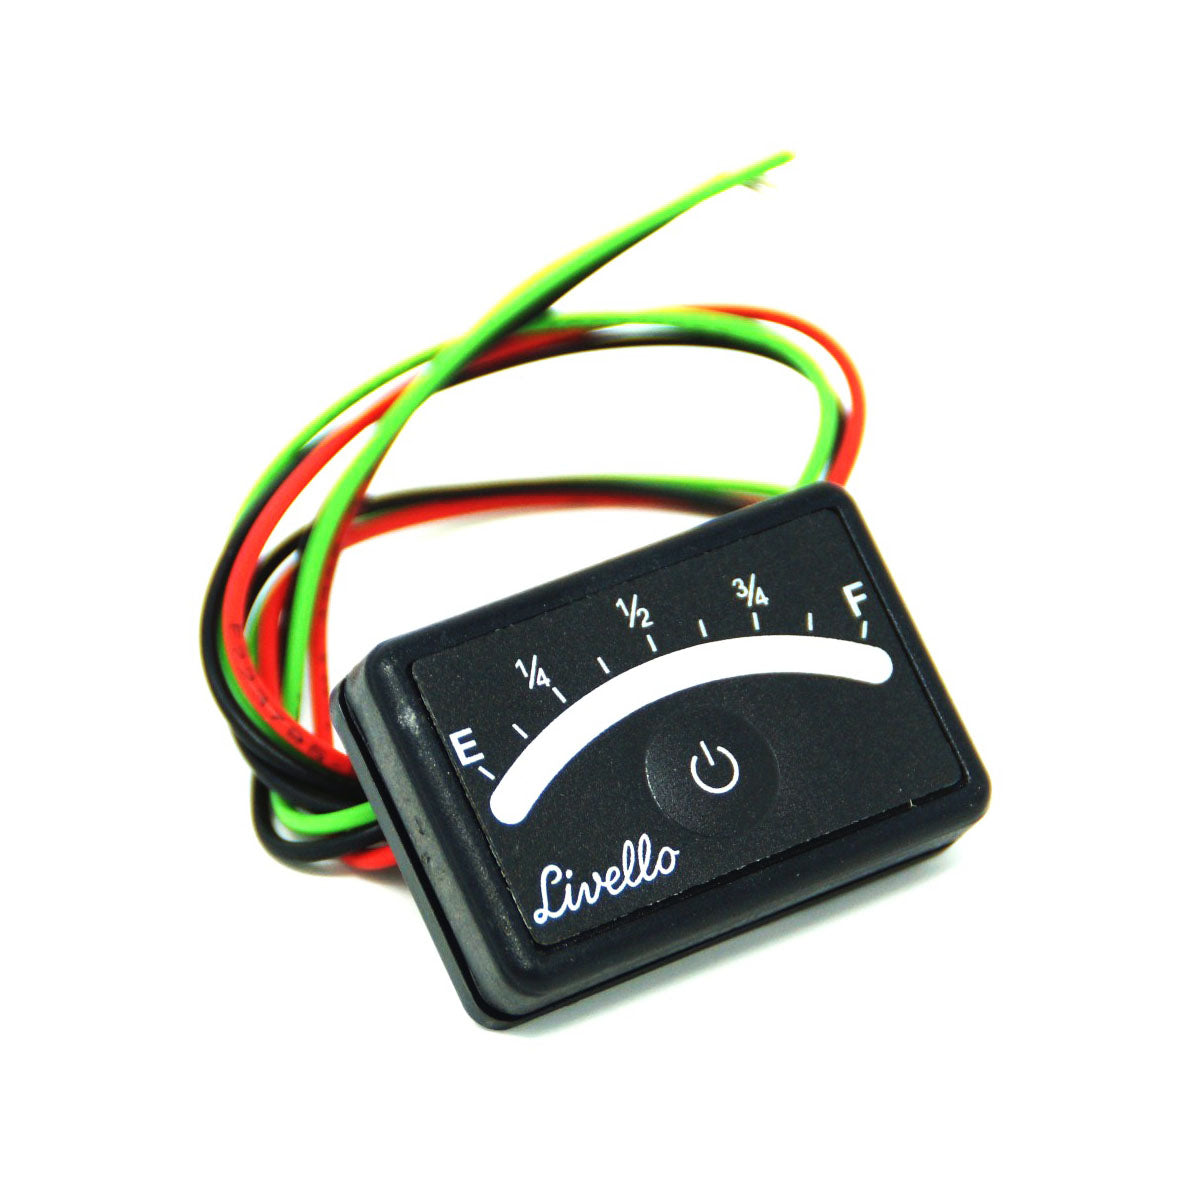 Mopeka Tank Fuel Level Indicator Set with Bluetooth Receiver LP Sensor – DN  AUTOGAS PARTS LTD